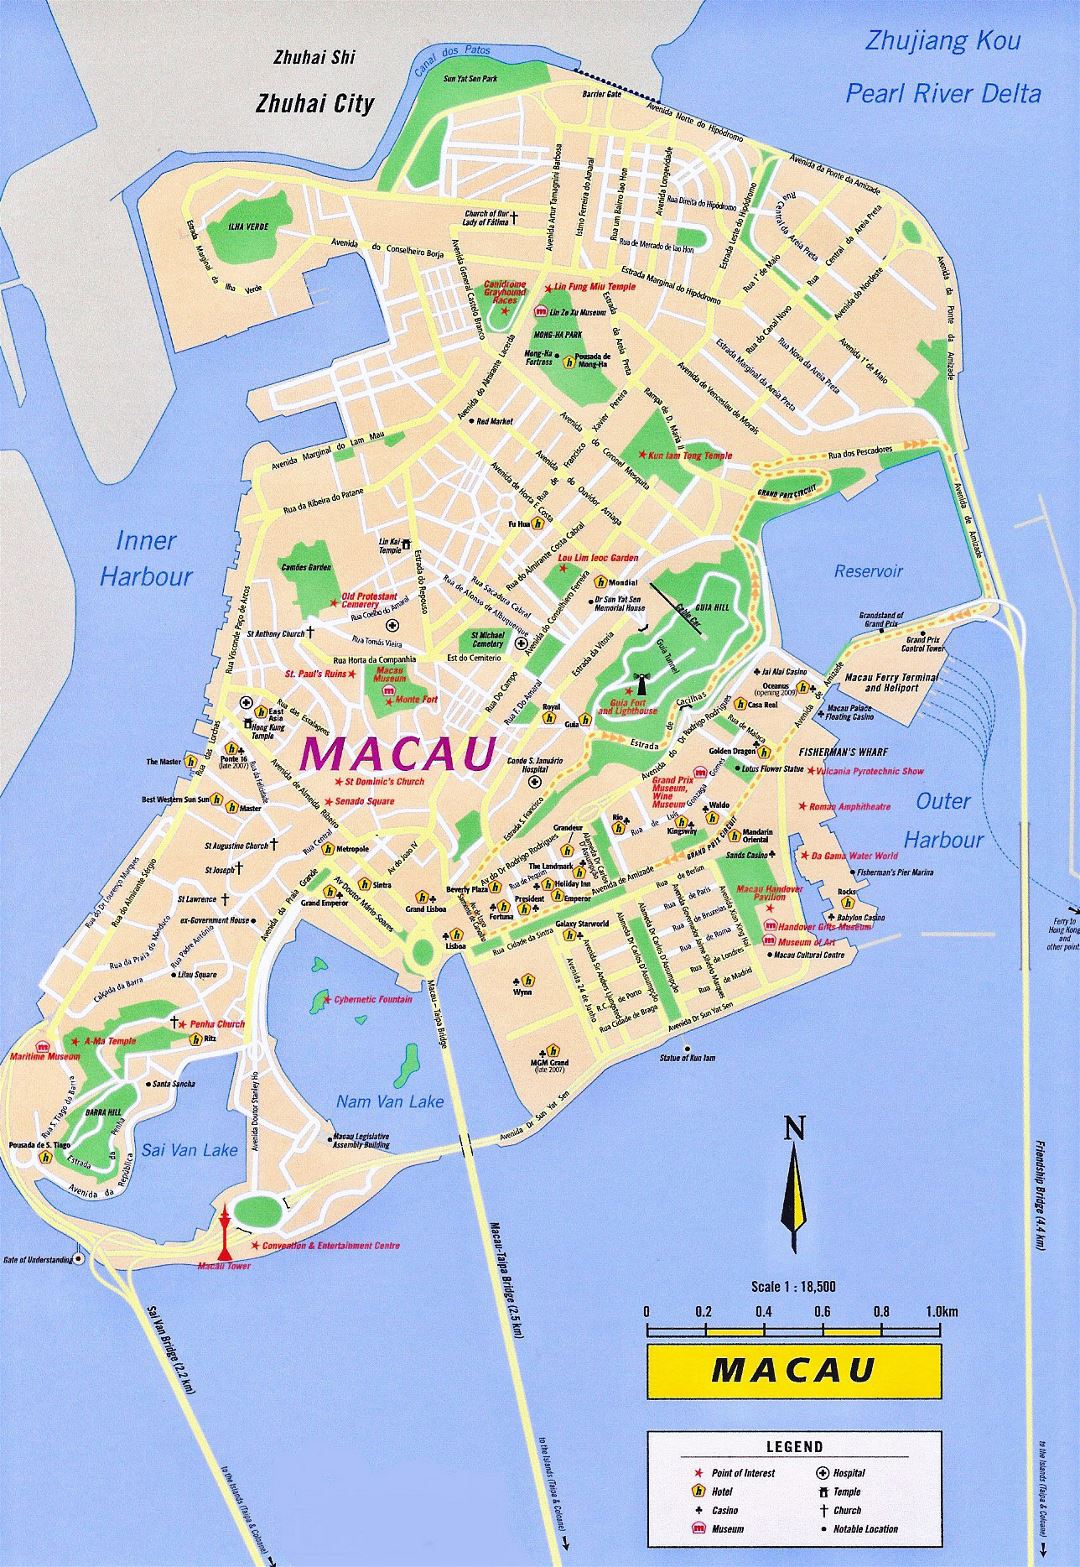 Large tourist map of Macau with roads